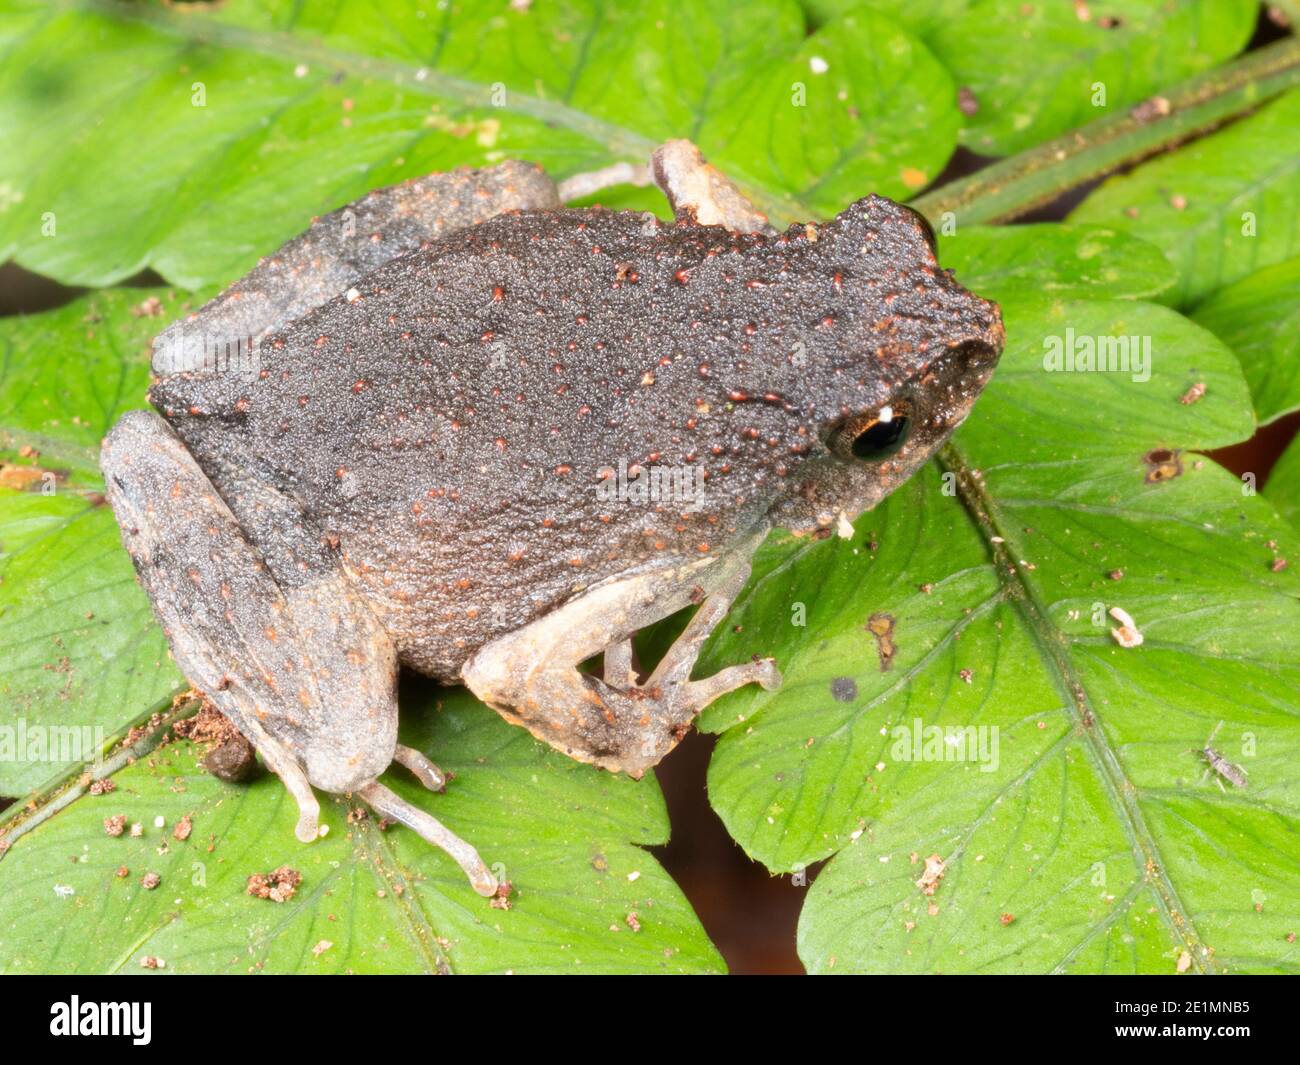 Peters' Dwarf Frog (Engystomops petersi) in rainforest in the Ecuadorian Amazon. Stock Photo